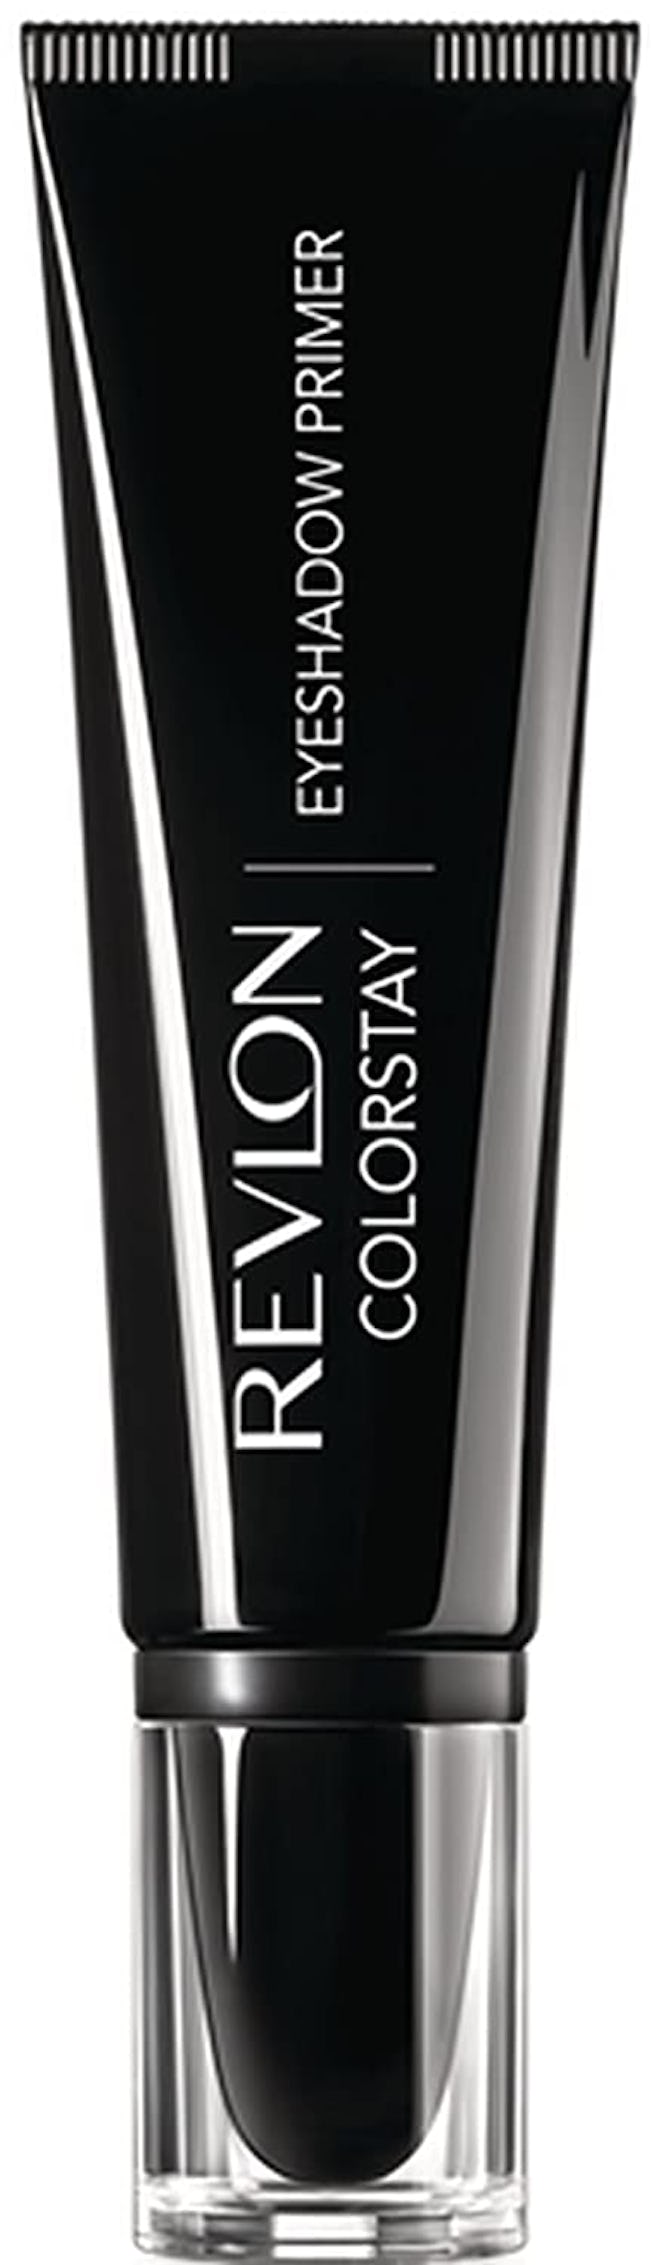 Revlon Colorstay Eyelid Primer